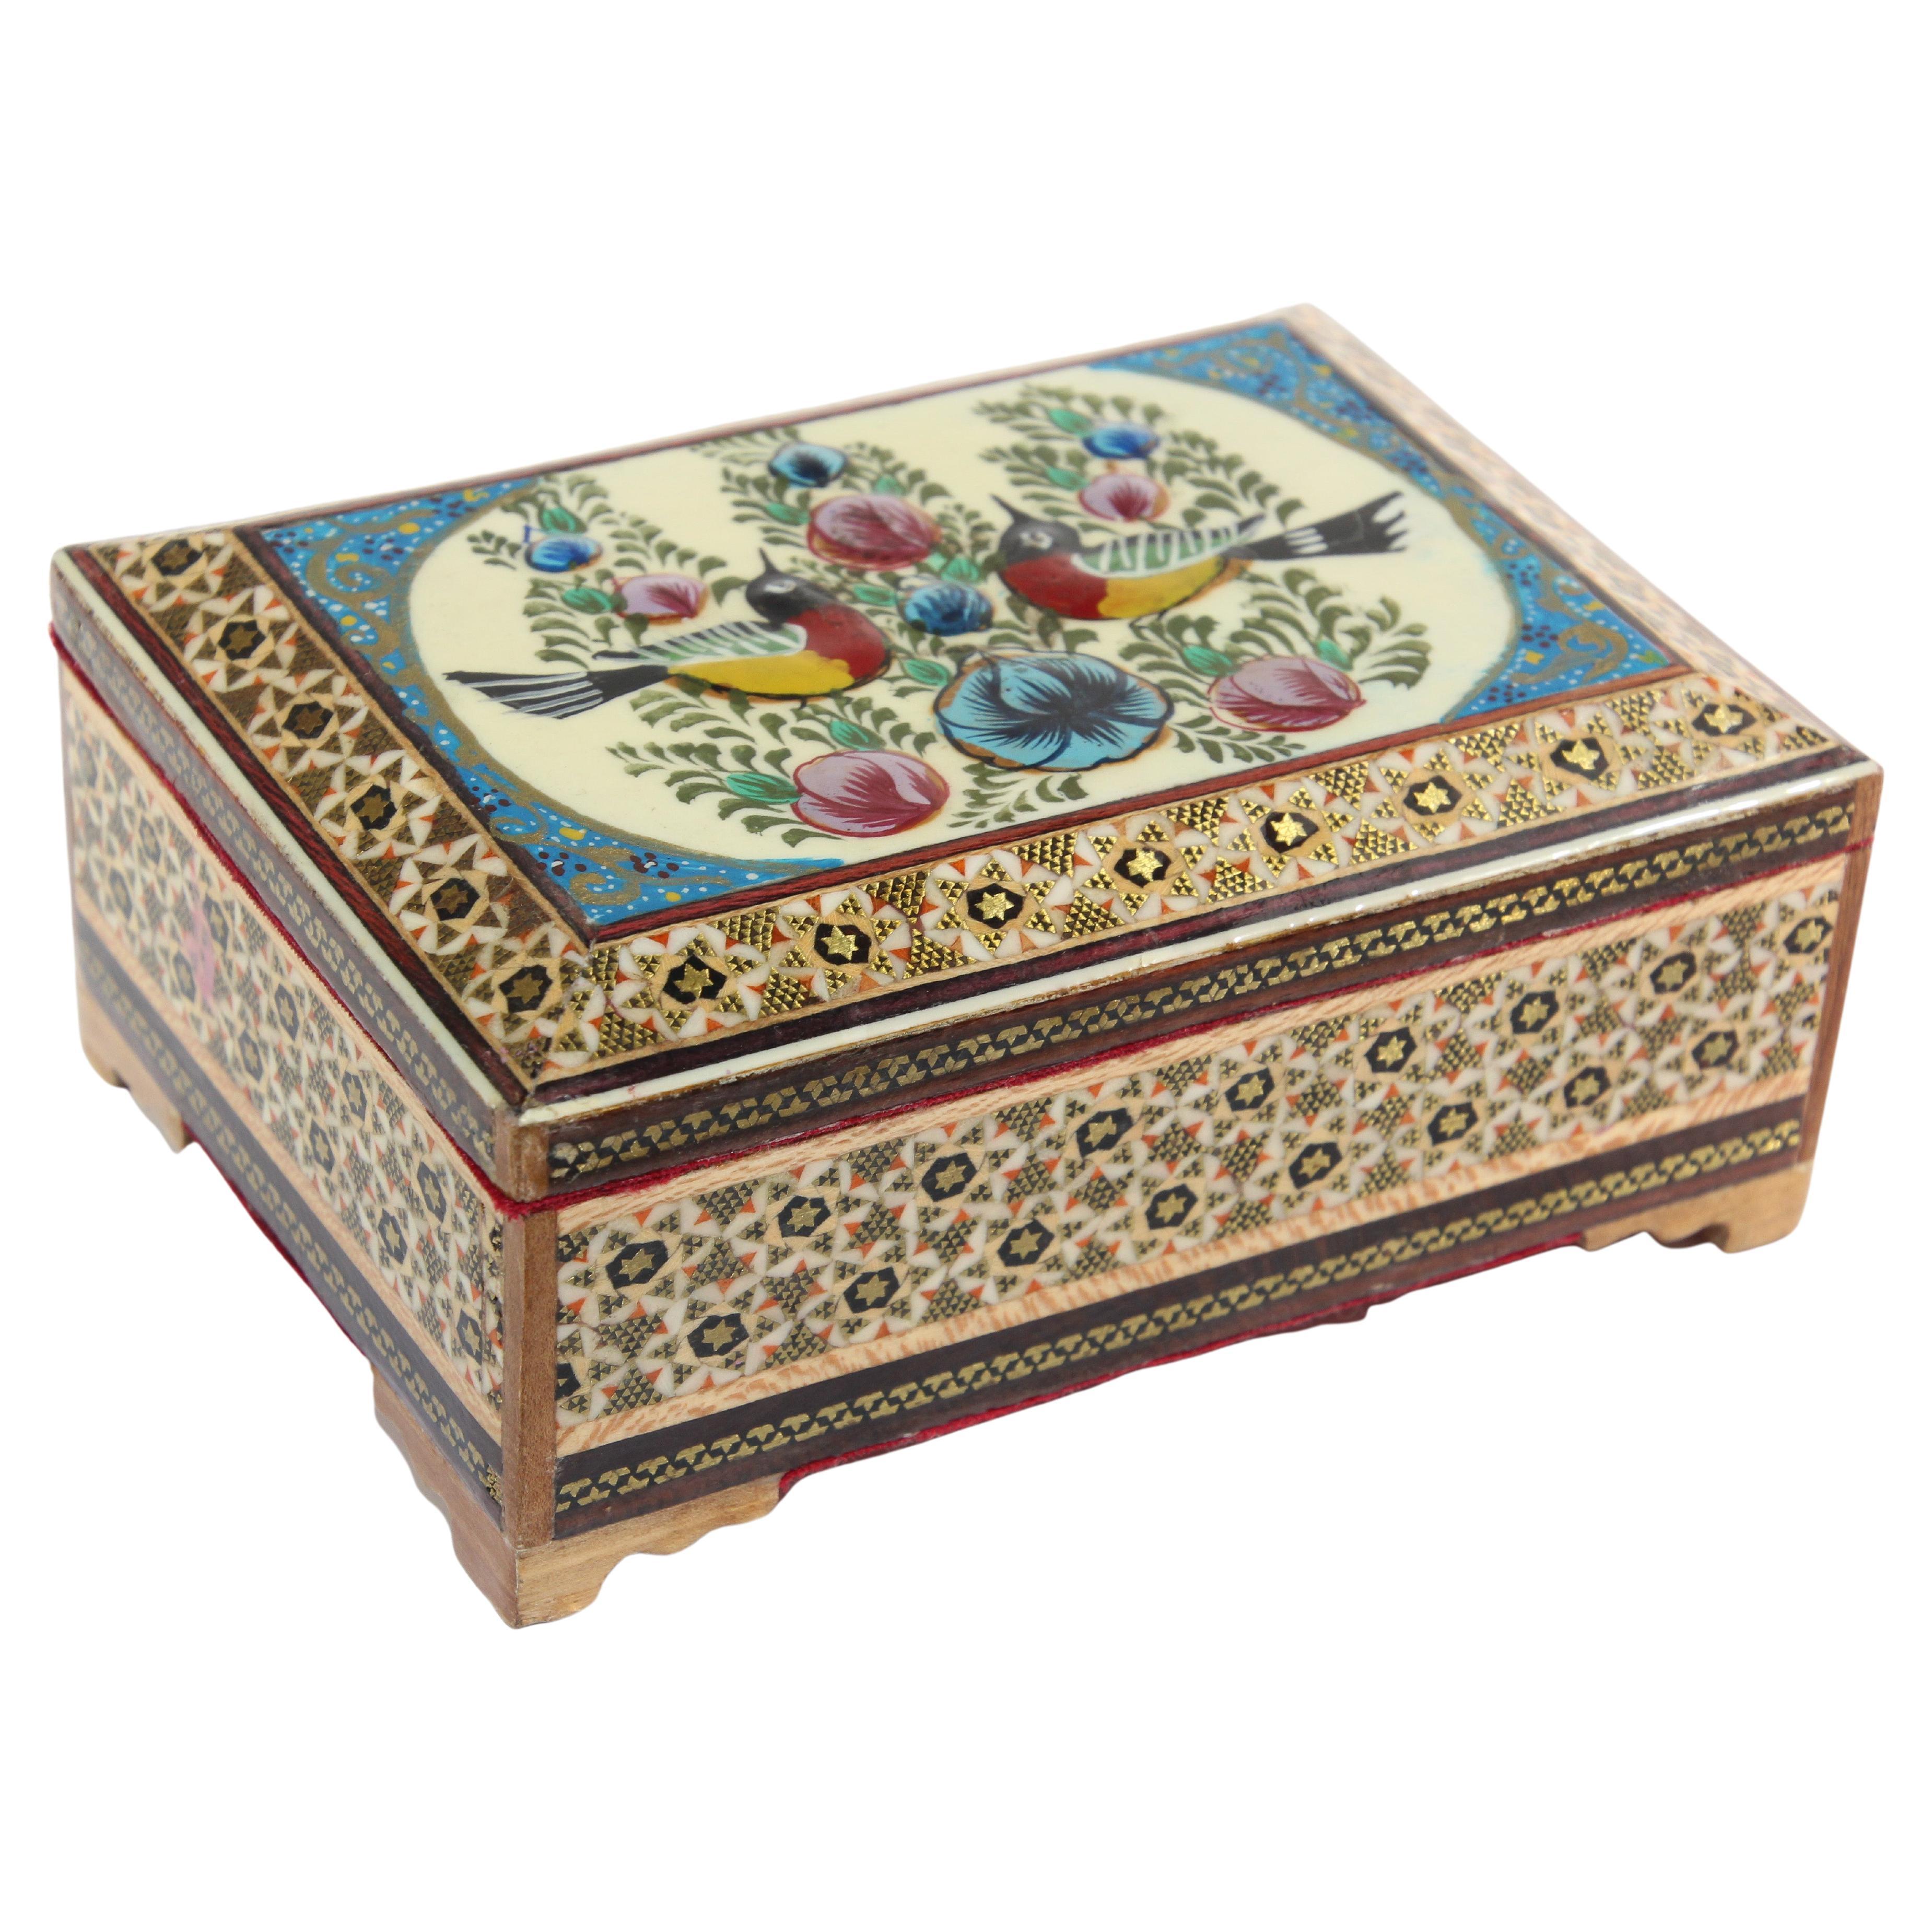 Mosaic Middle Eastern Moorish Trinket Box